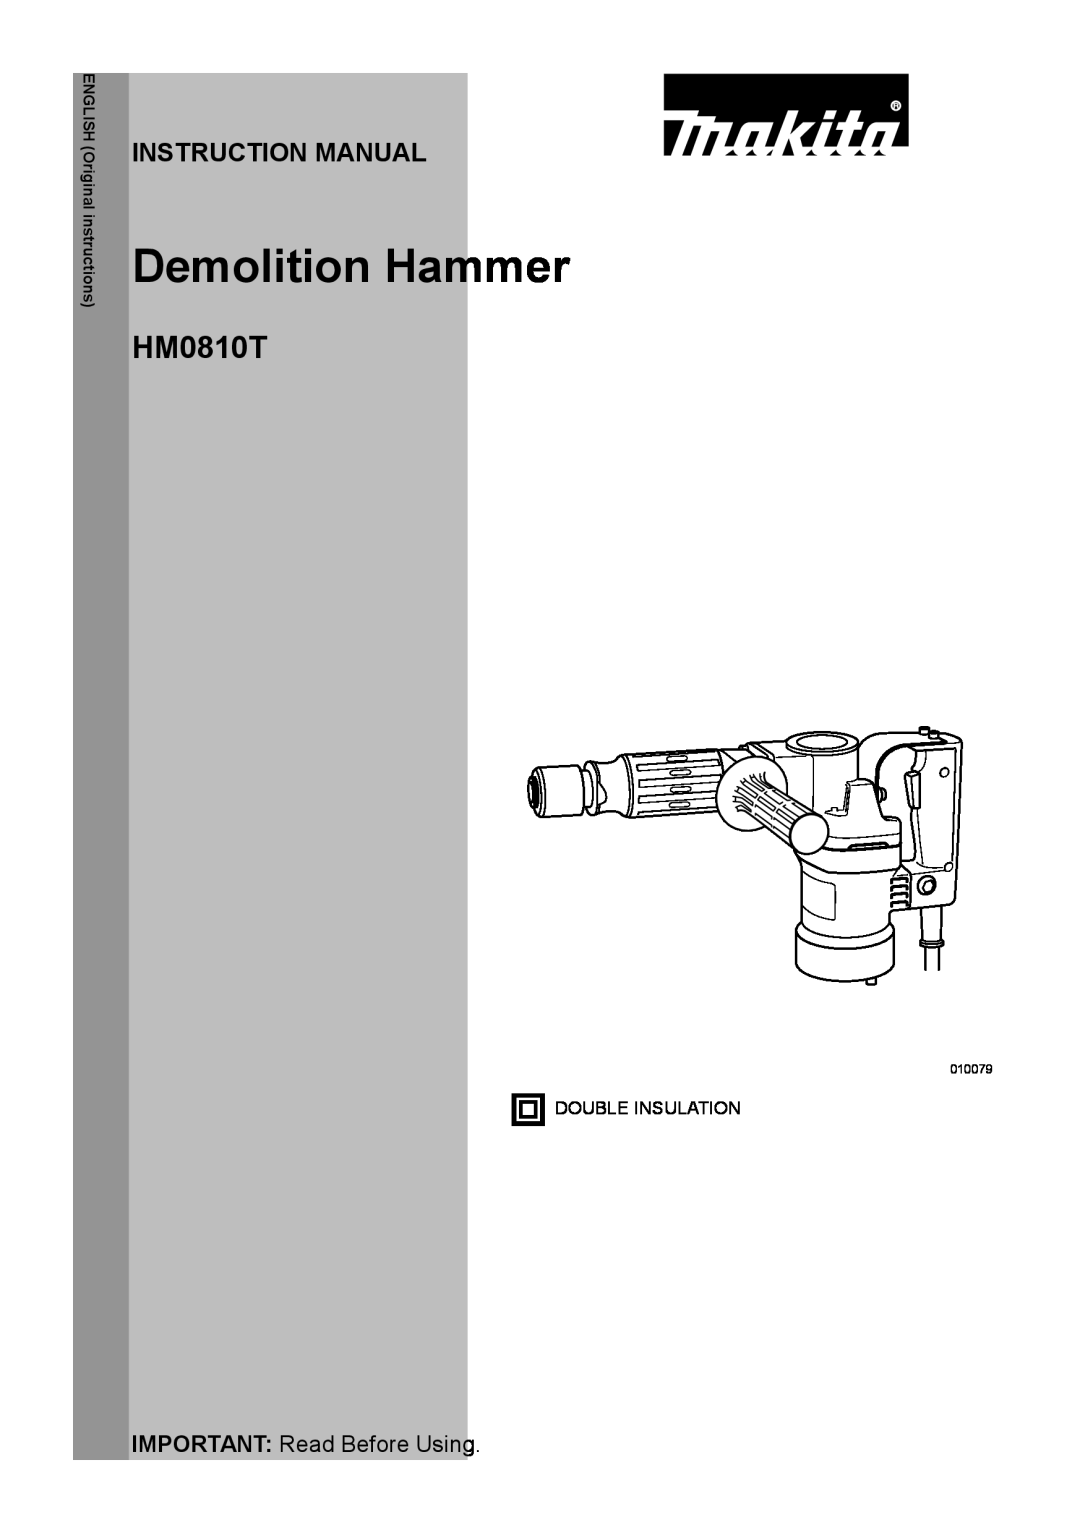 Makita HM0810T 010079 2 instruction manual Instruction Manual, Demolition Hammer, IMPORTANT Read Before Using 